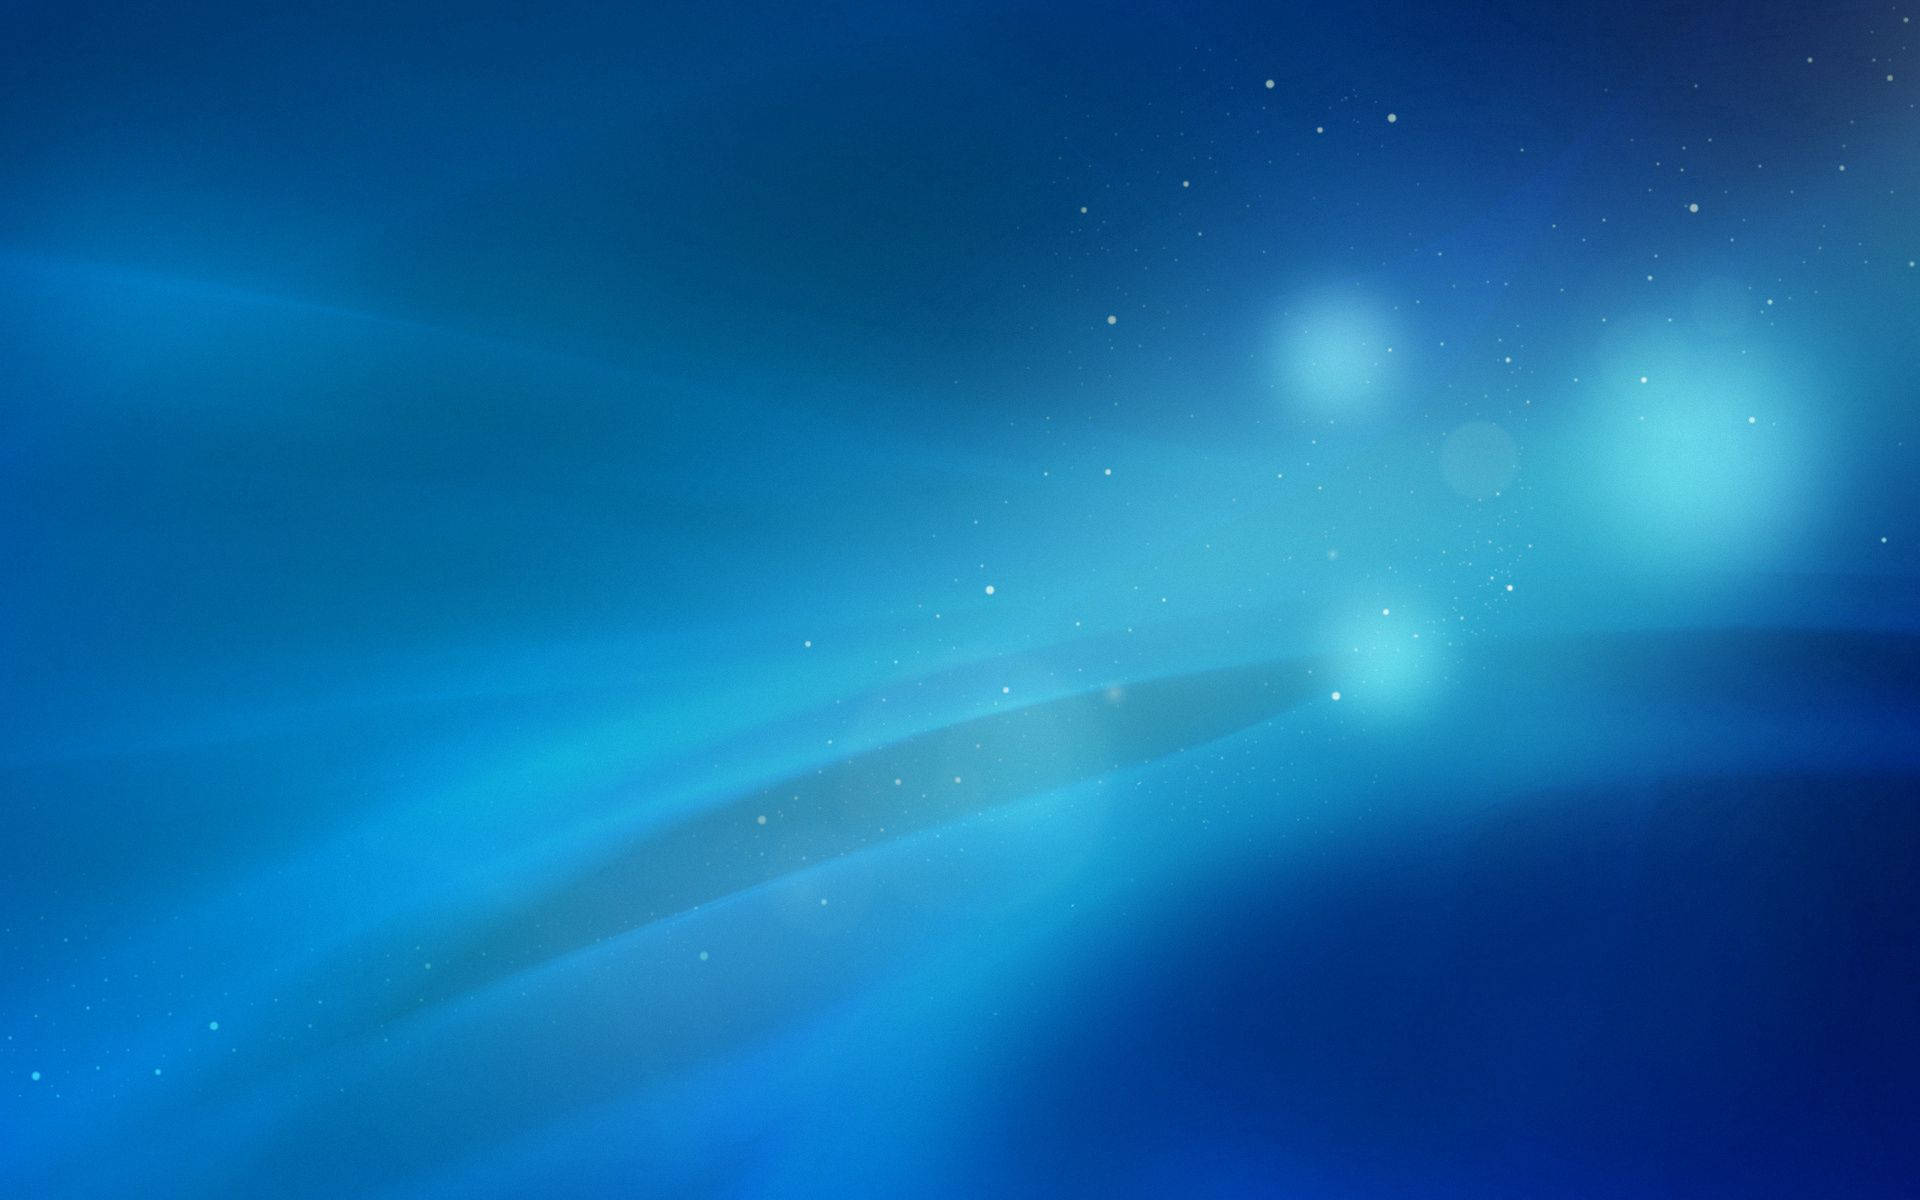 Illuminated Blue Abstract Blur Wallpaper